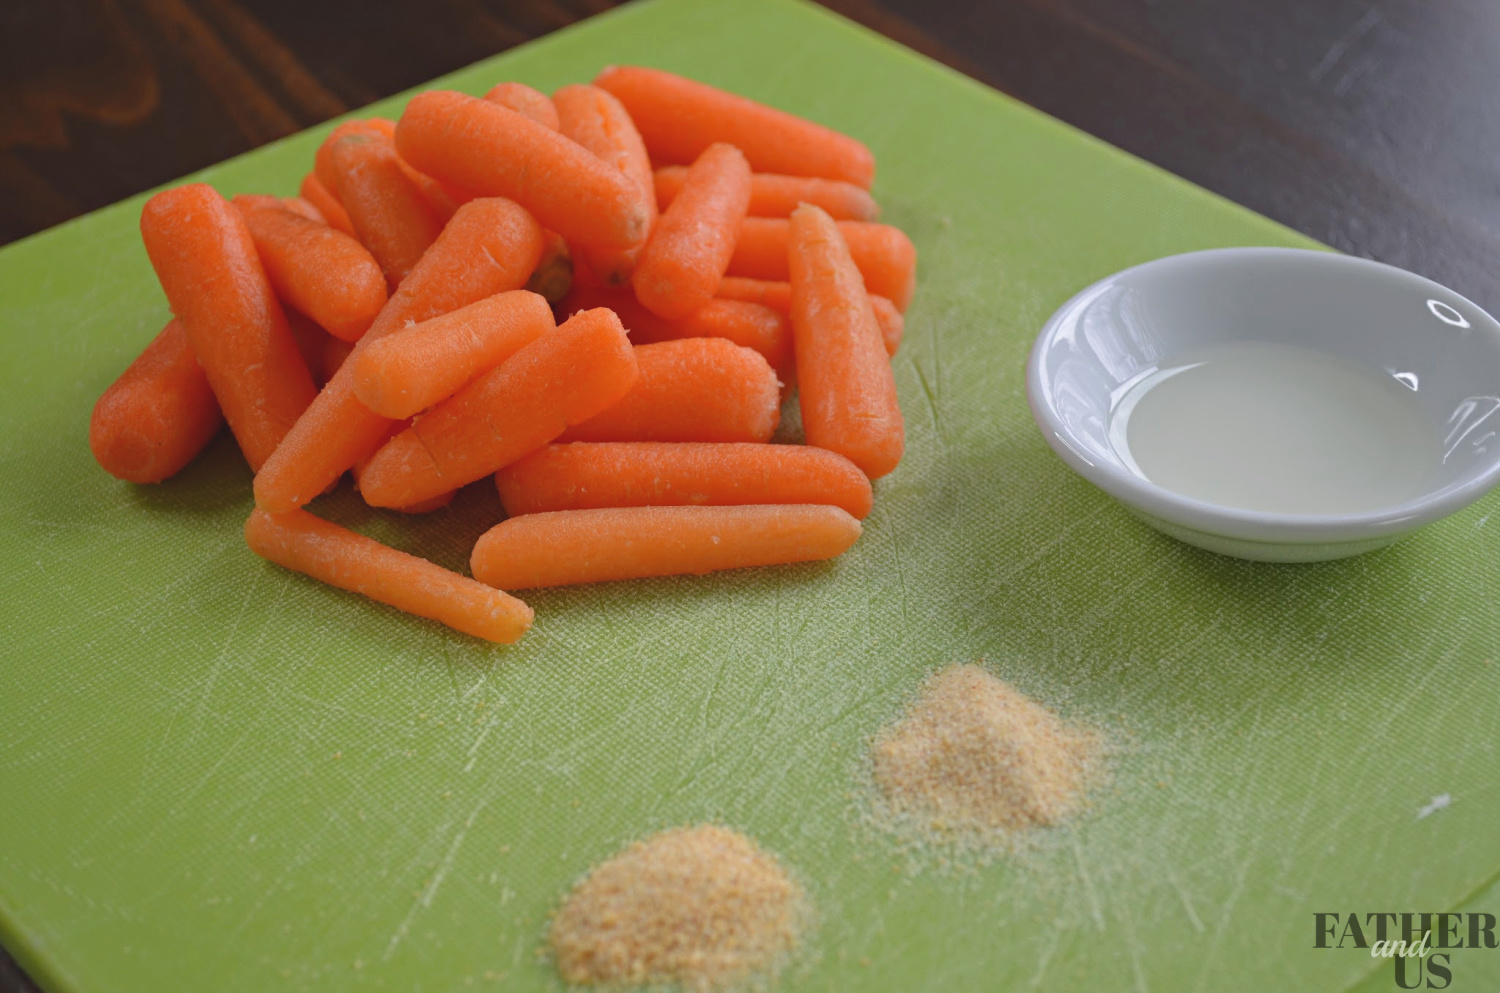 Air Fryer Carrots Ingredients include garlic salt, onion salt and olive oil